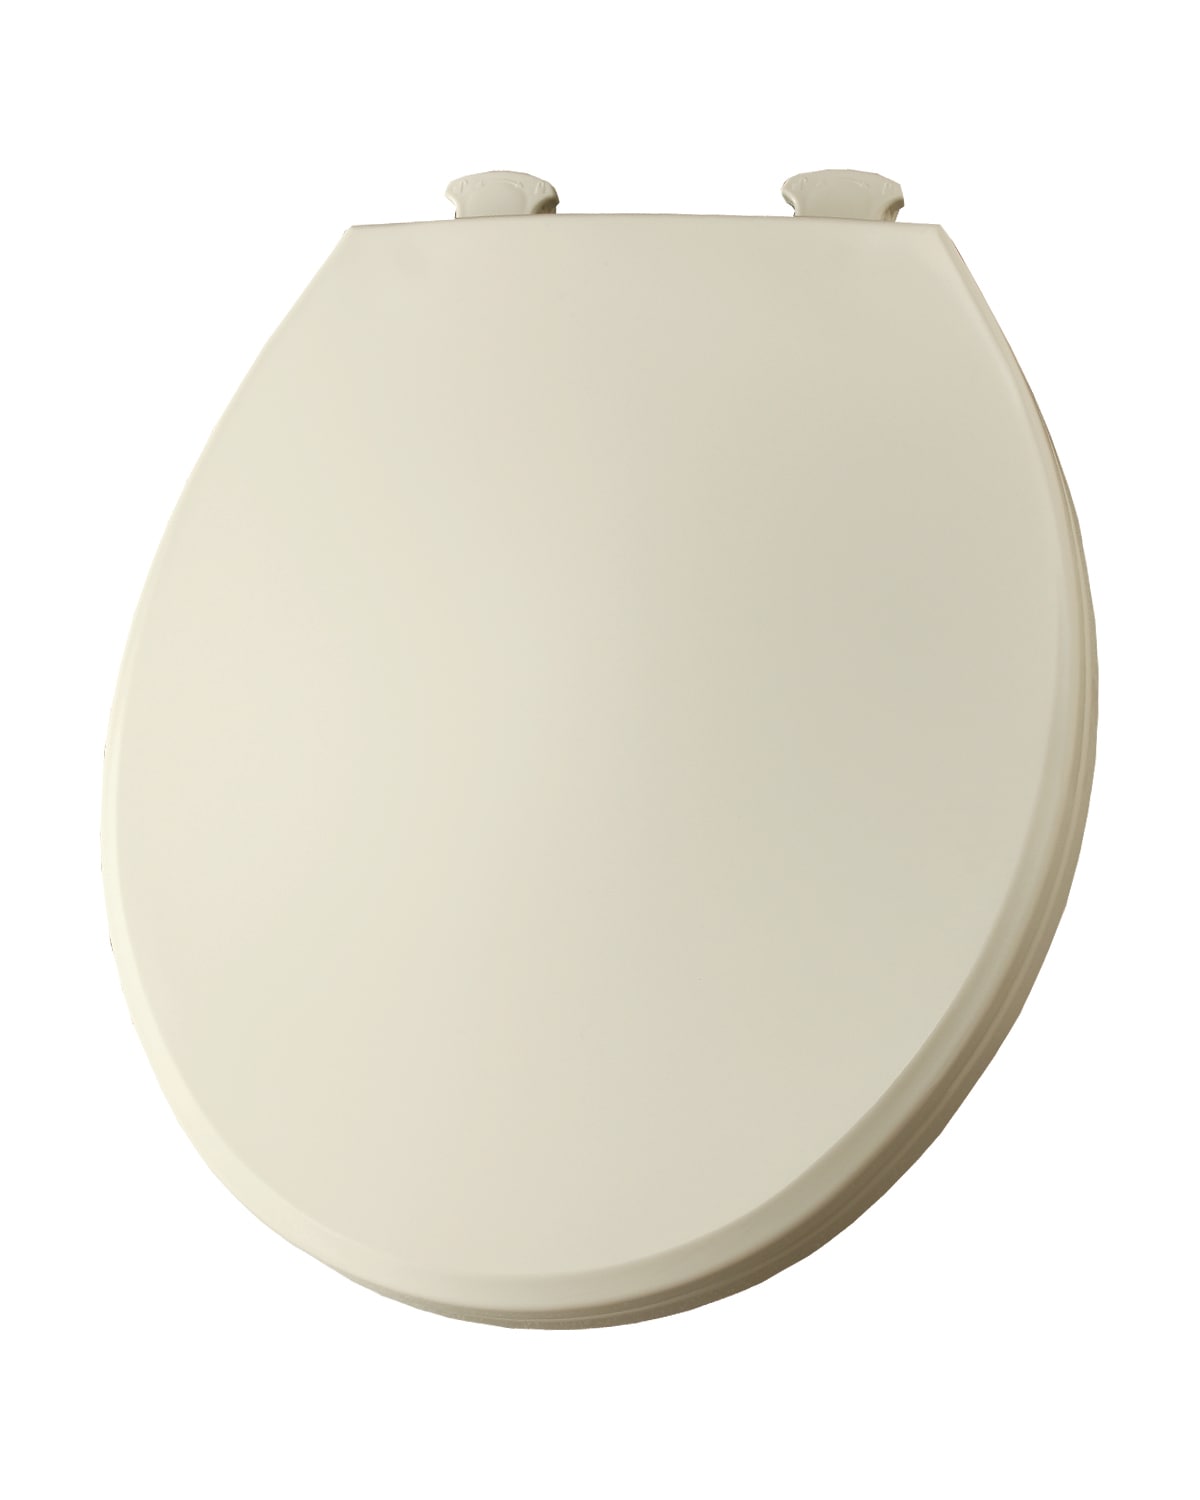 Bemis 800ec 006 Lift-off Solid Plastic Round Toilet Seat Closed Front Bone for sale online 